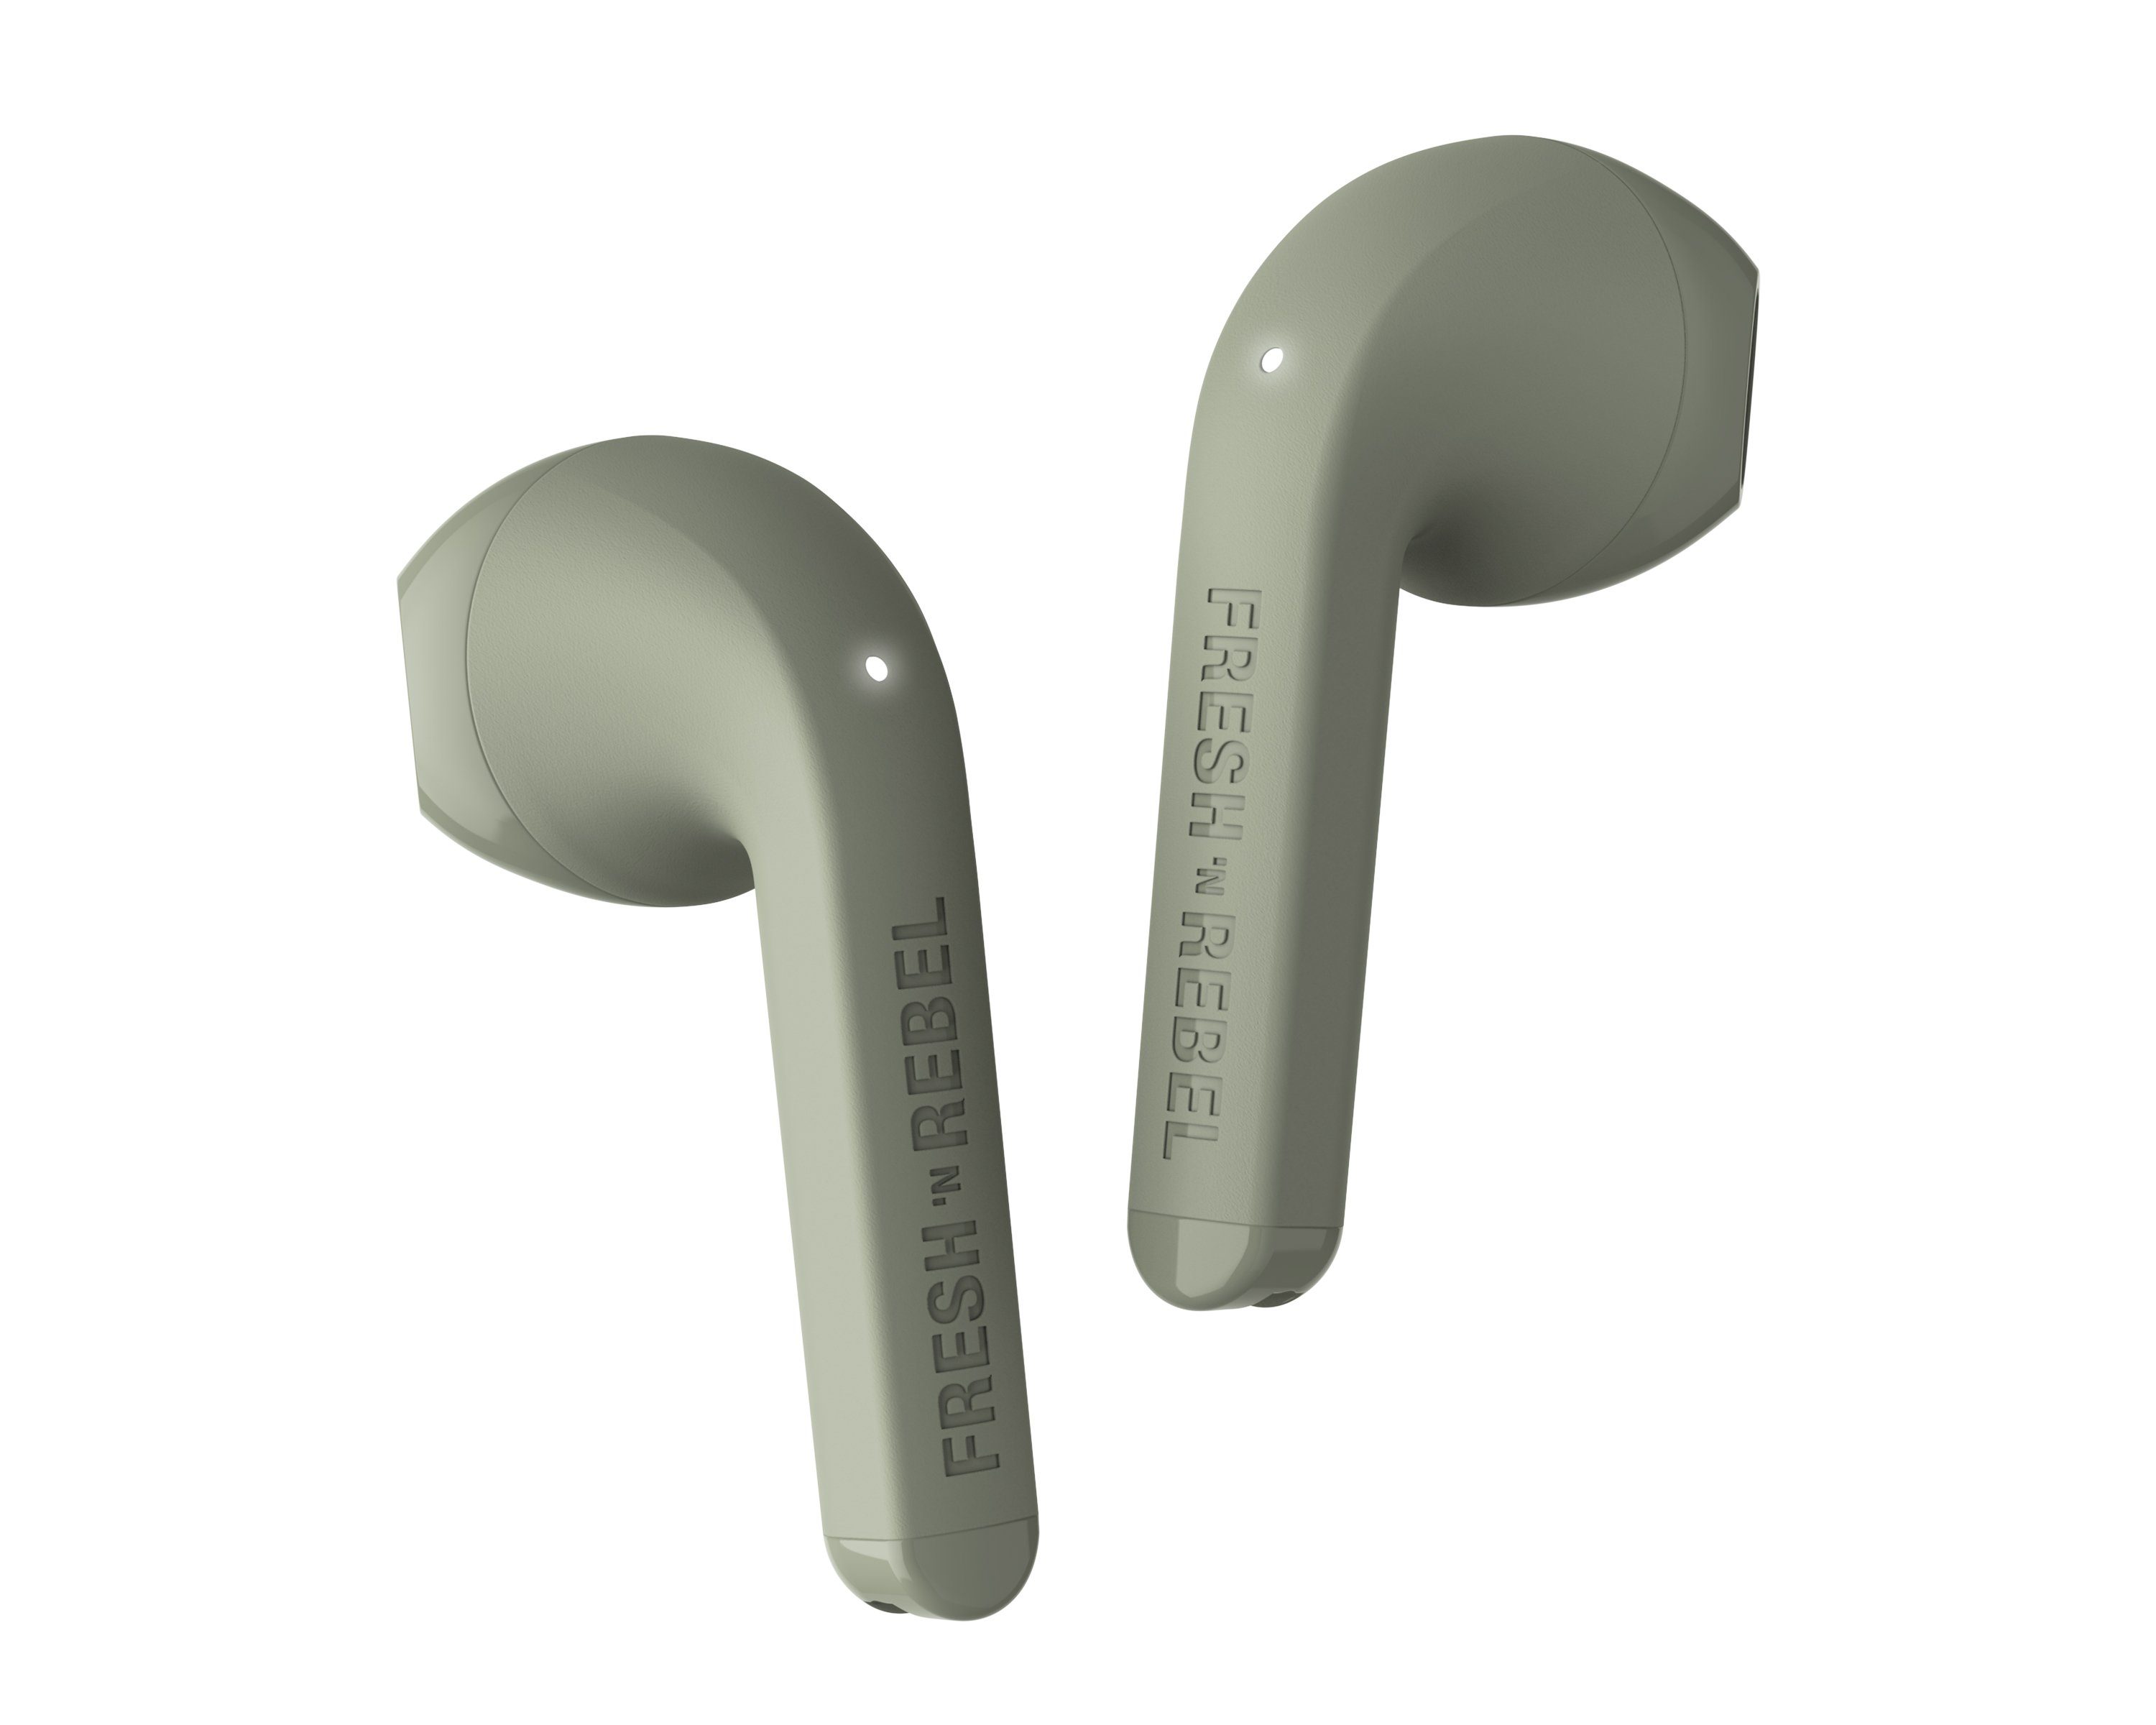 Rebel Kopfhörer Fresh´n Touch-Control-Steuerung, Auto-Kopplung) Twins (Dual-Master-Funktion, Dried Green Core